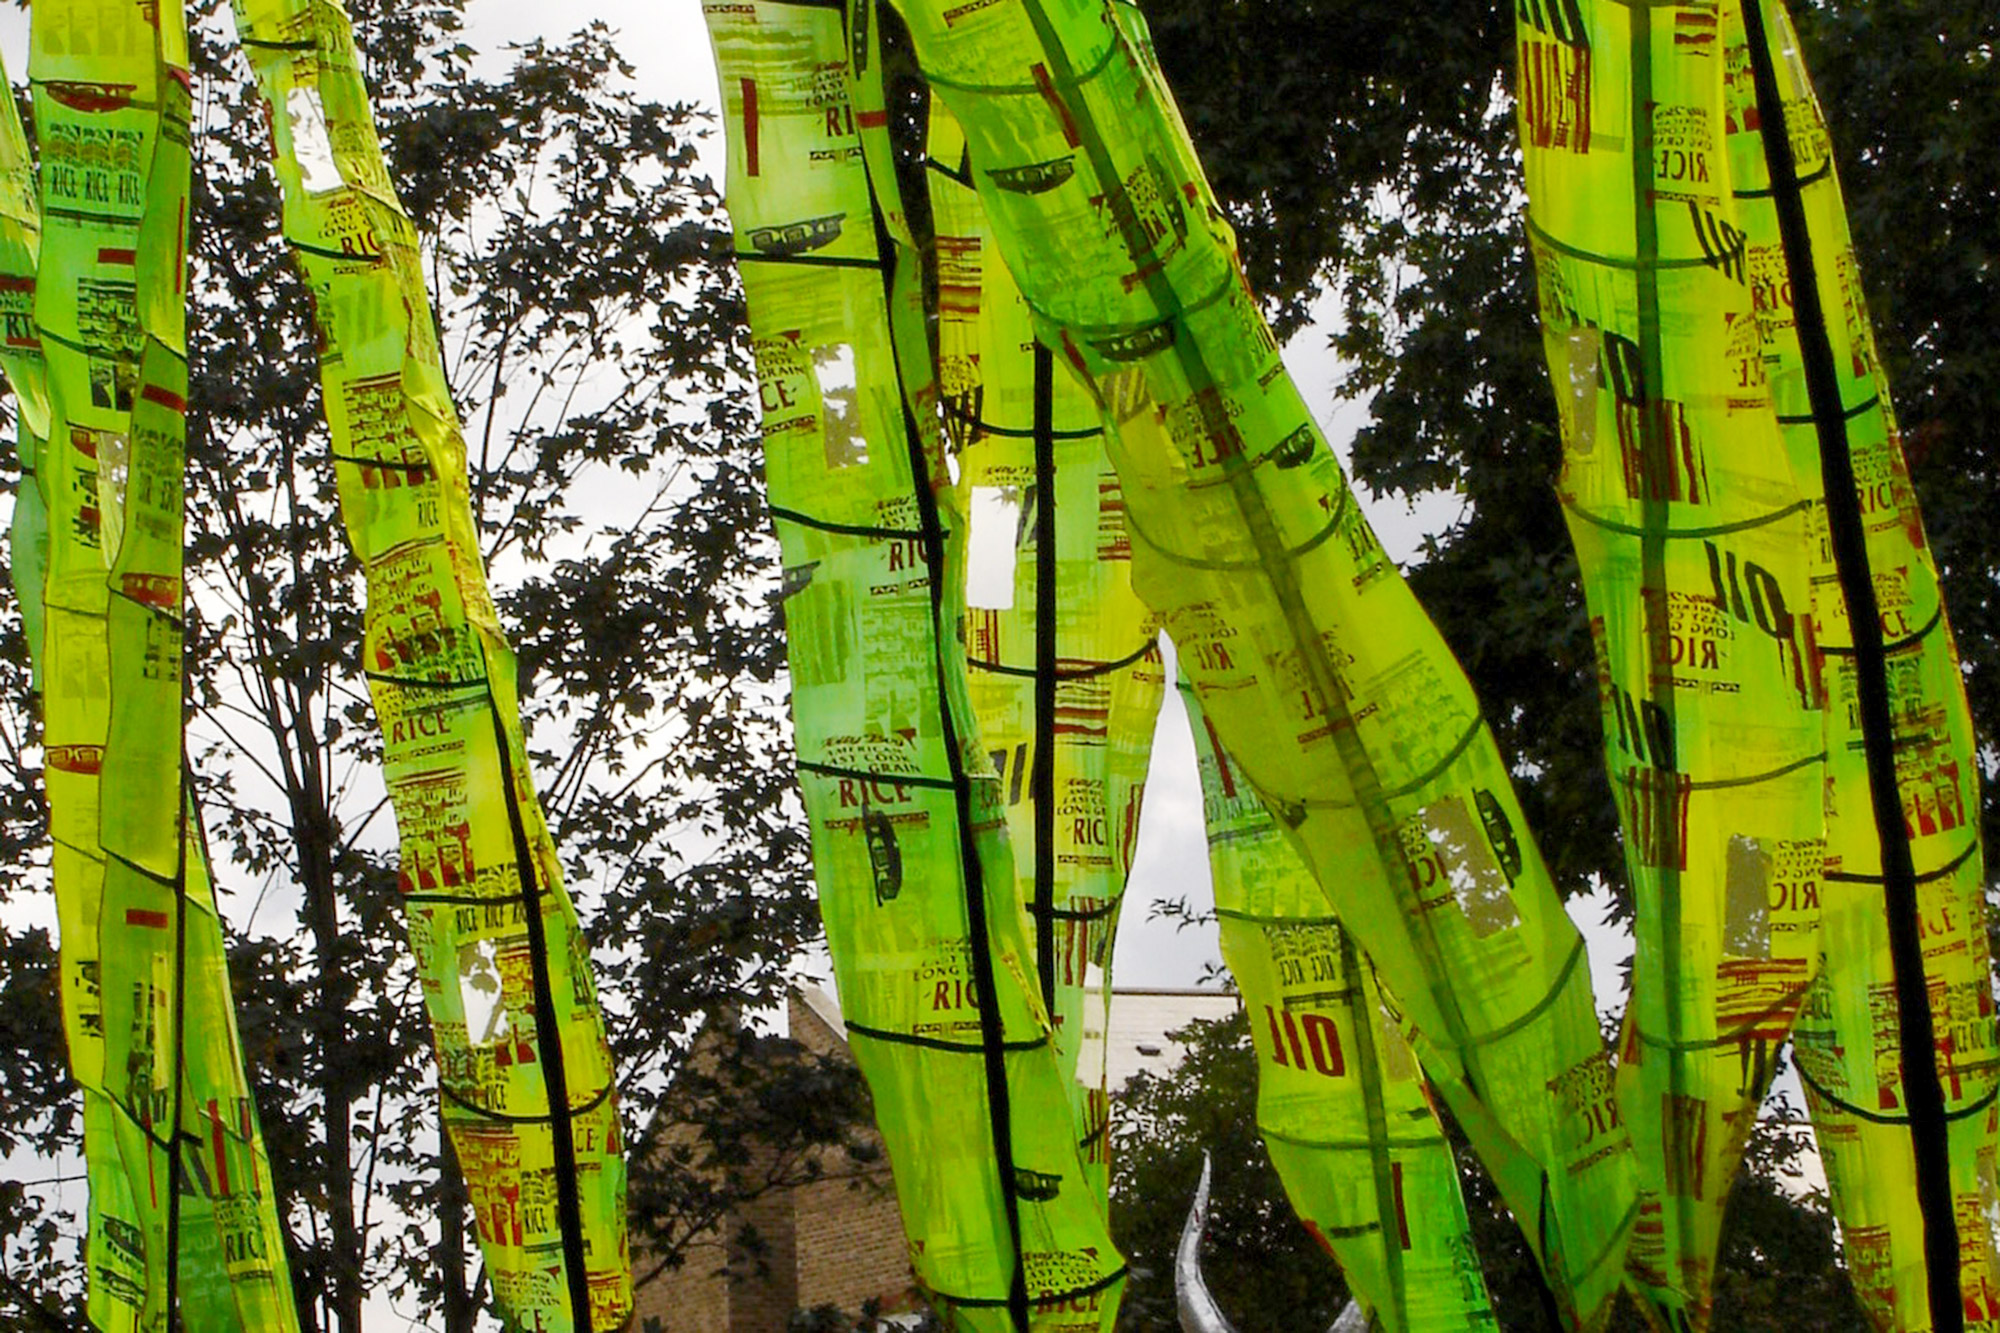 Tall green leaf banners